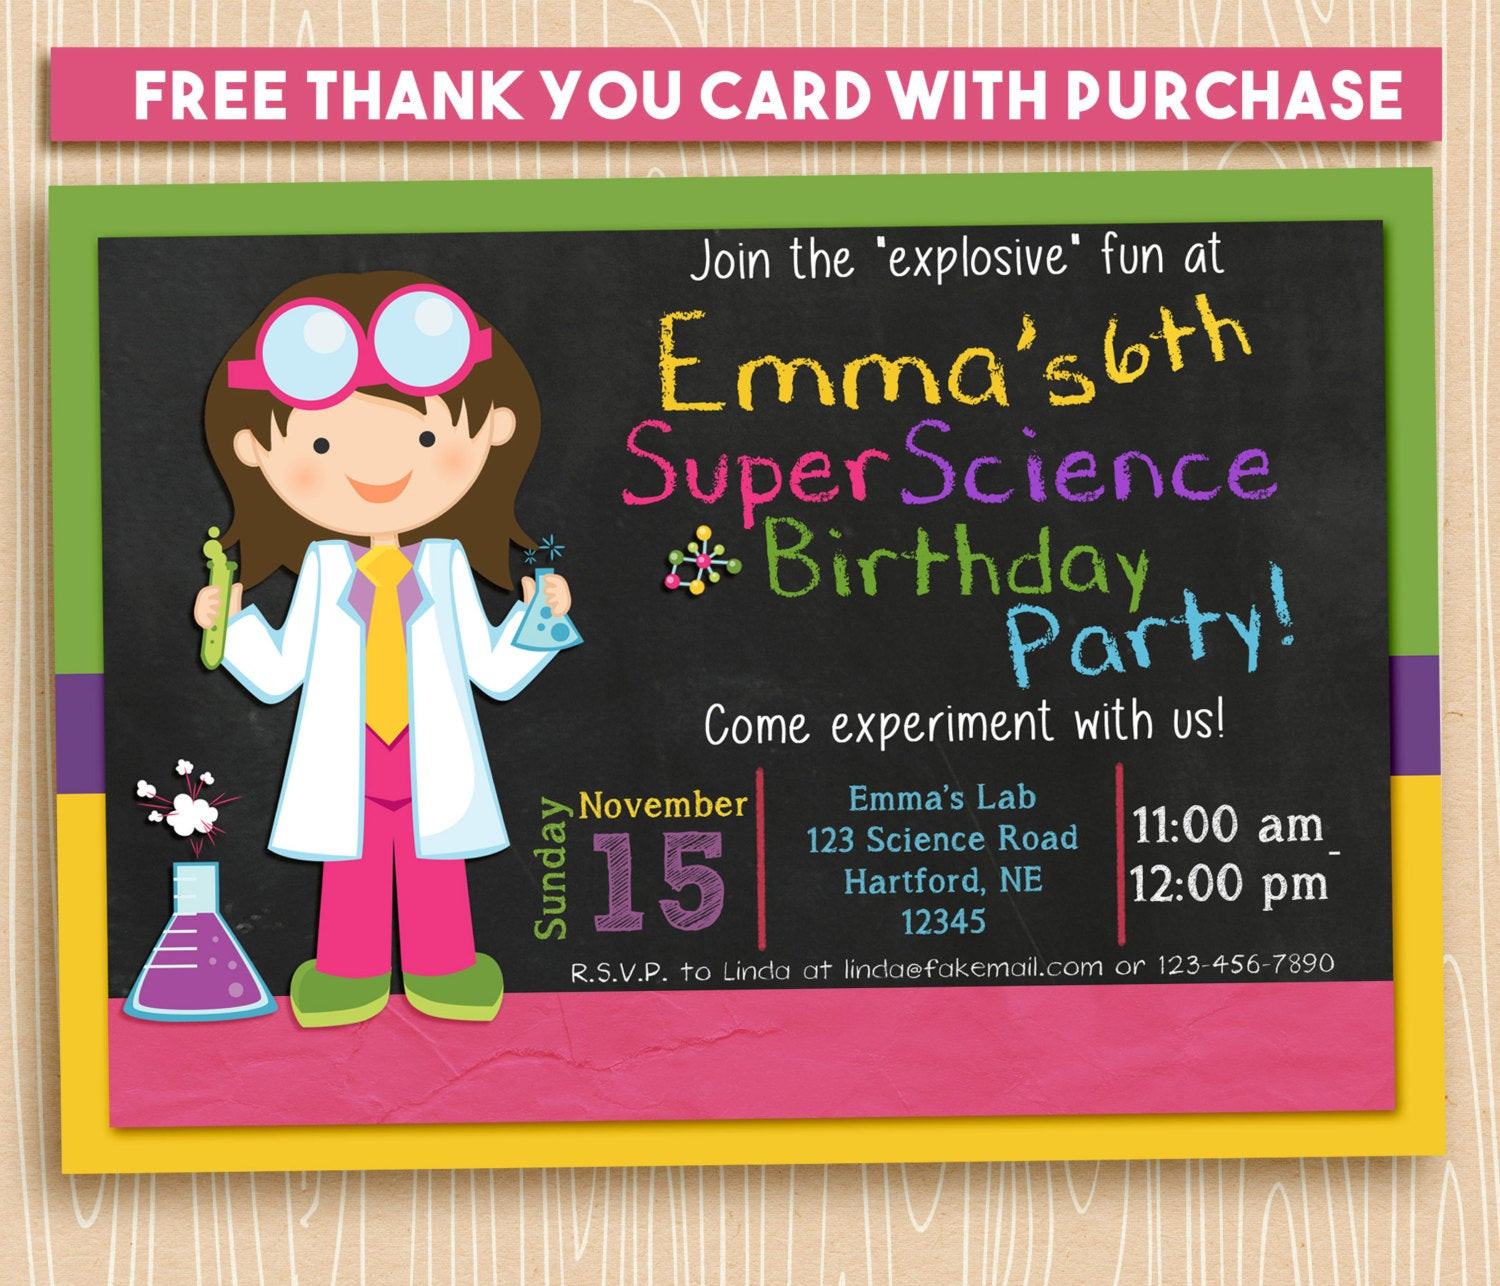 Science Birthday Party Invitations
 Printable Science Party Invitation Girl Scientist FREE THANK